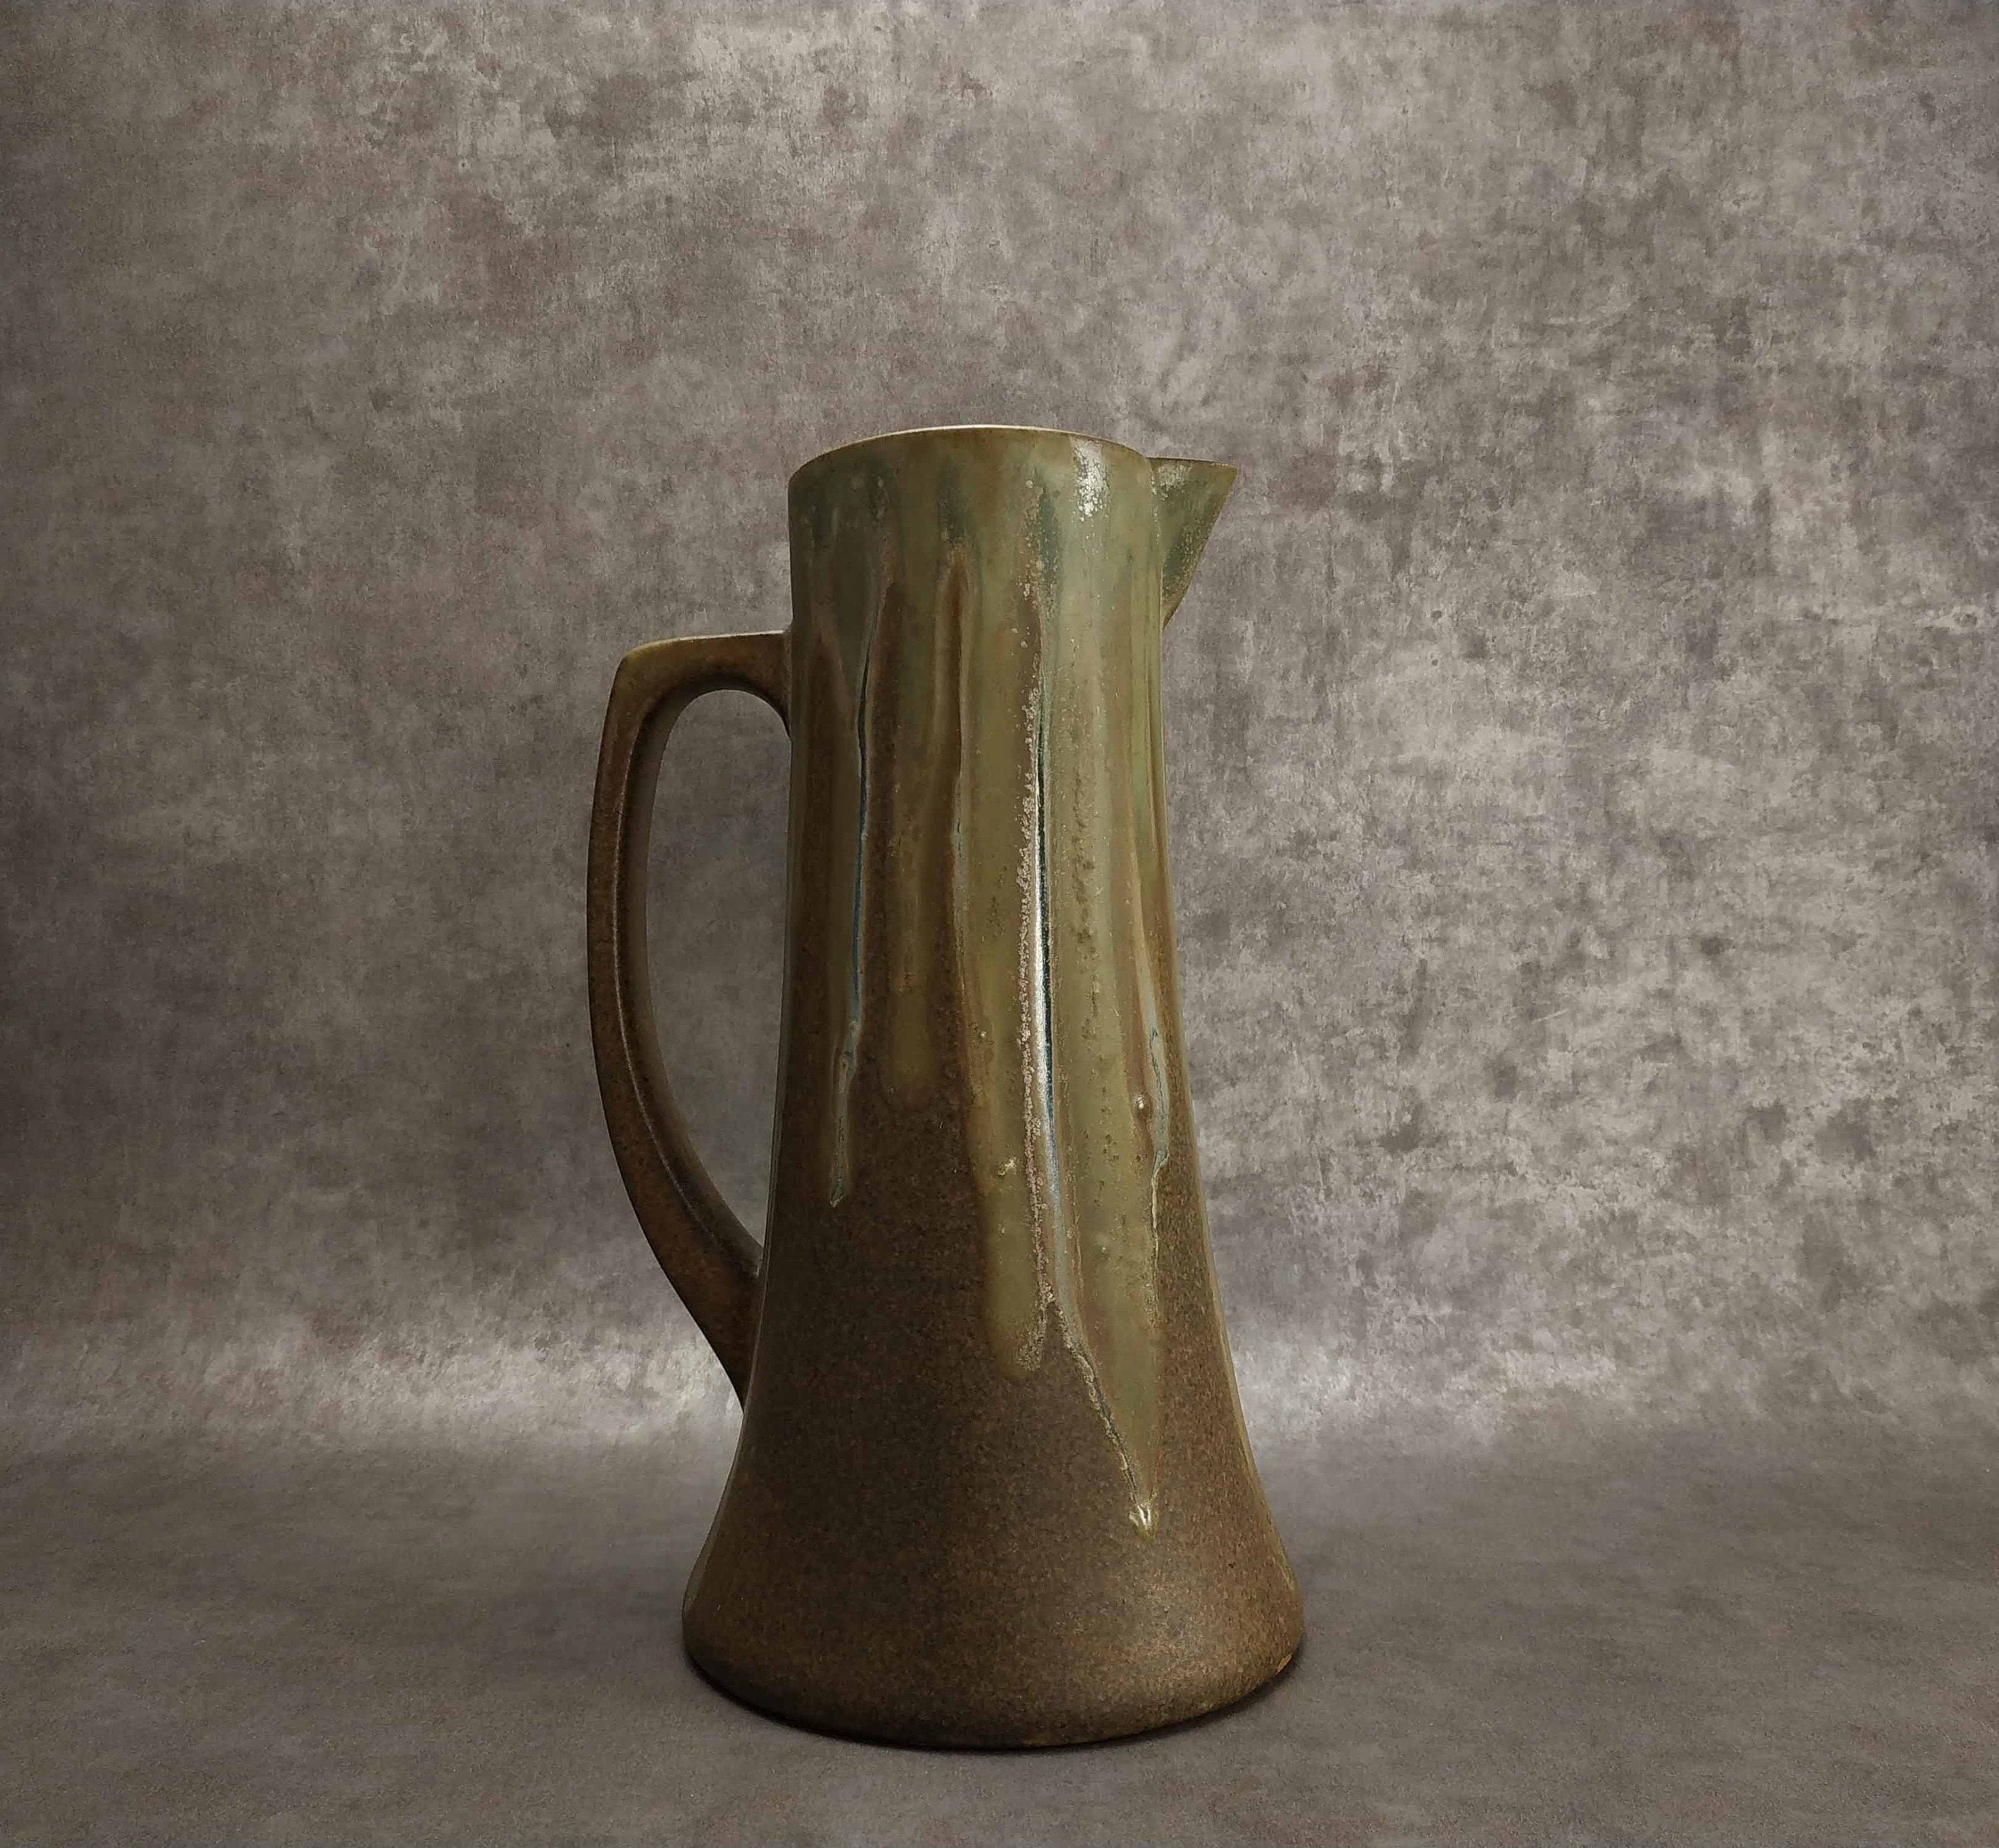 Énorme 2L ou 67 Fl Oz Denbac Pitcher, Antique Français Ceramic Water Art Nouveau Drip Glaze Pottery 